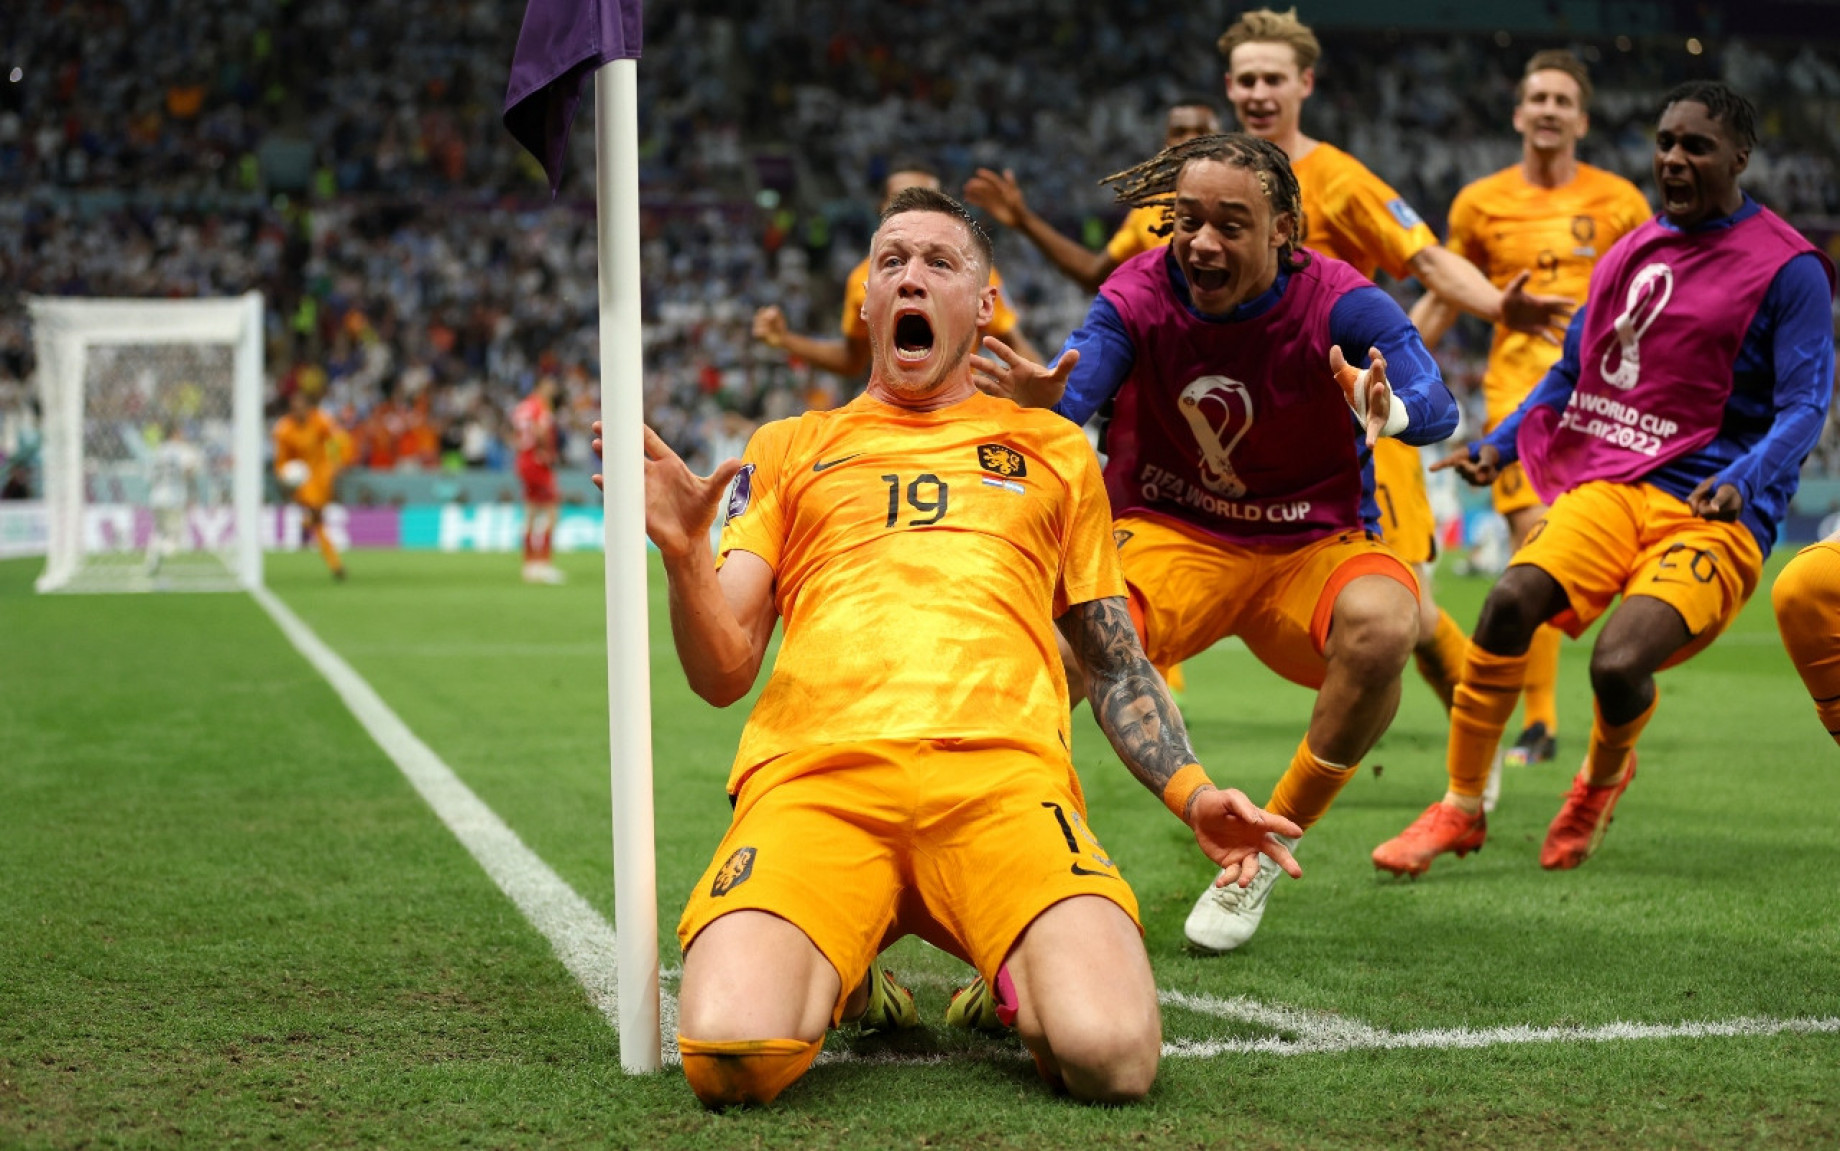 Romania-Olanda in streaming gratis: vedi la partita in diretta live